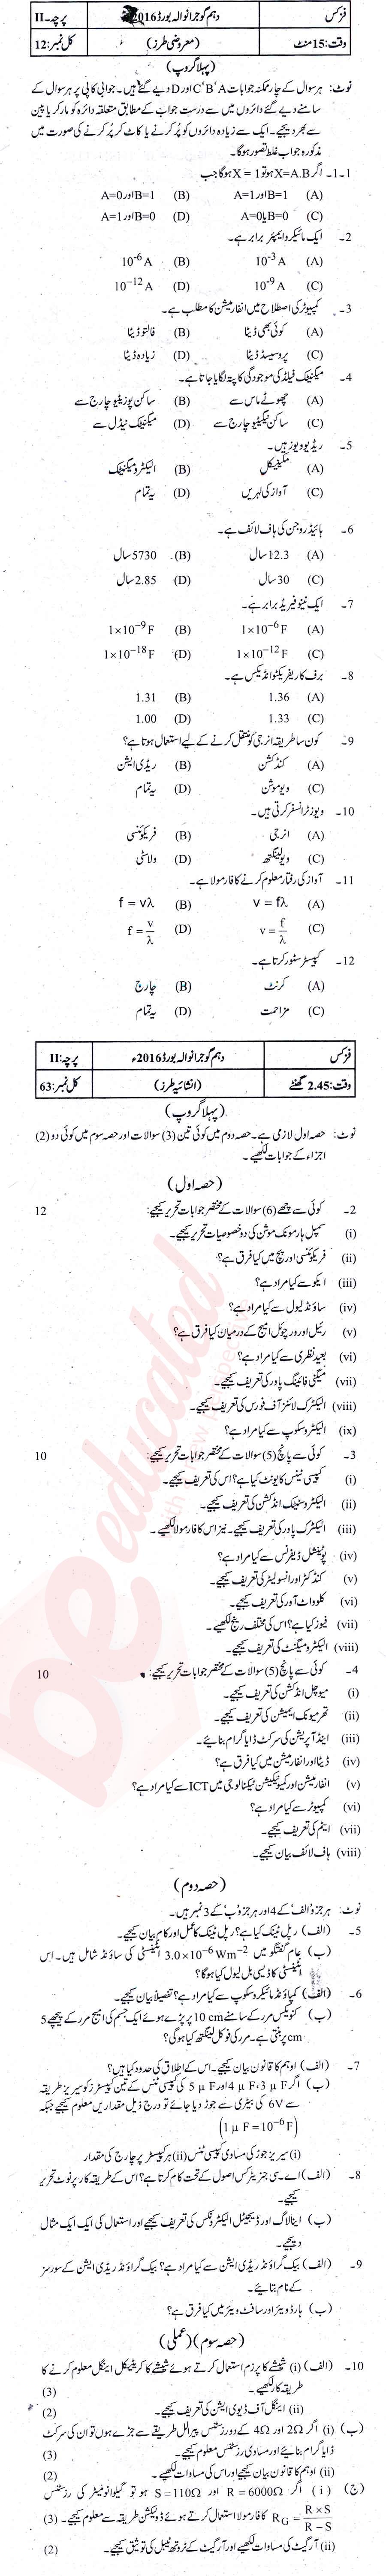 Physics 10th Urdu Medium Past Paper Group 1 BISE Gujranwala 2016